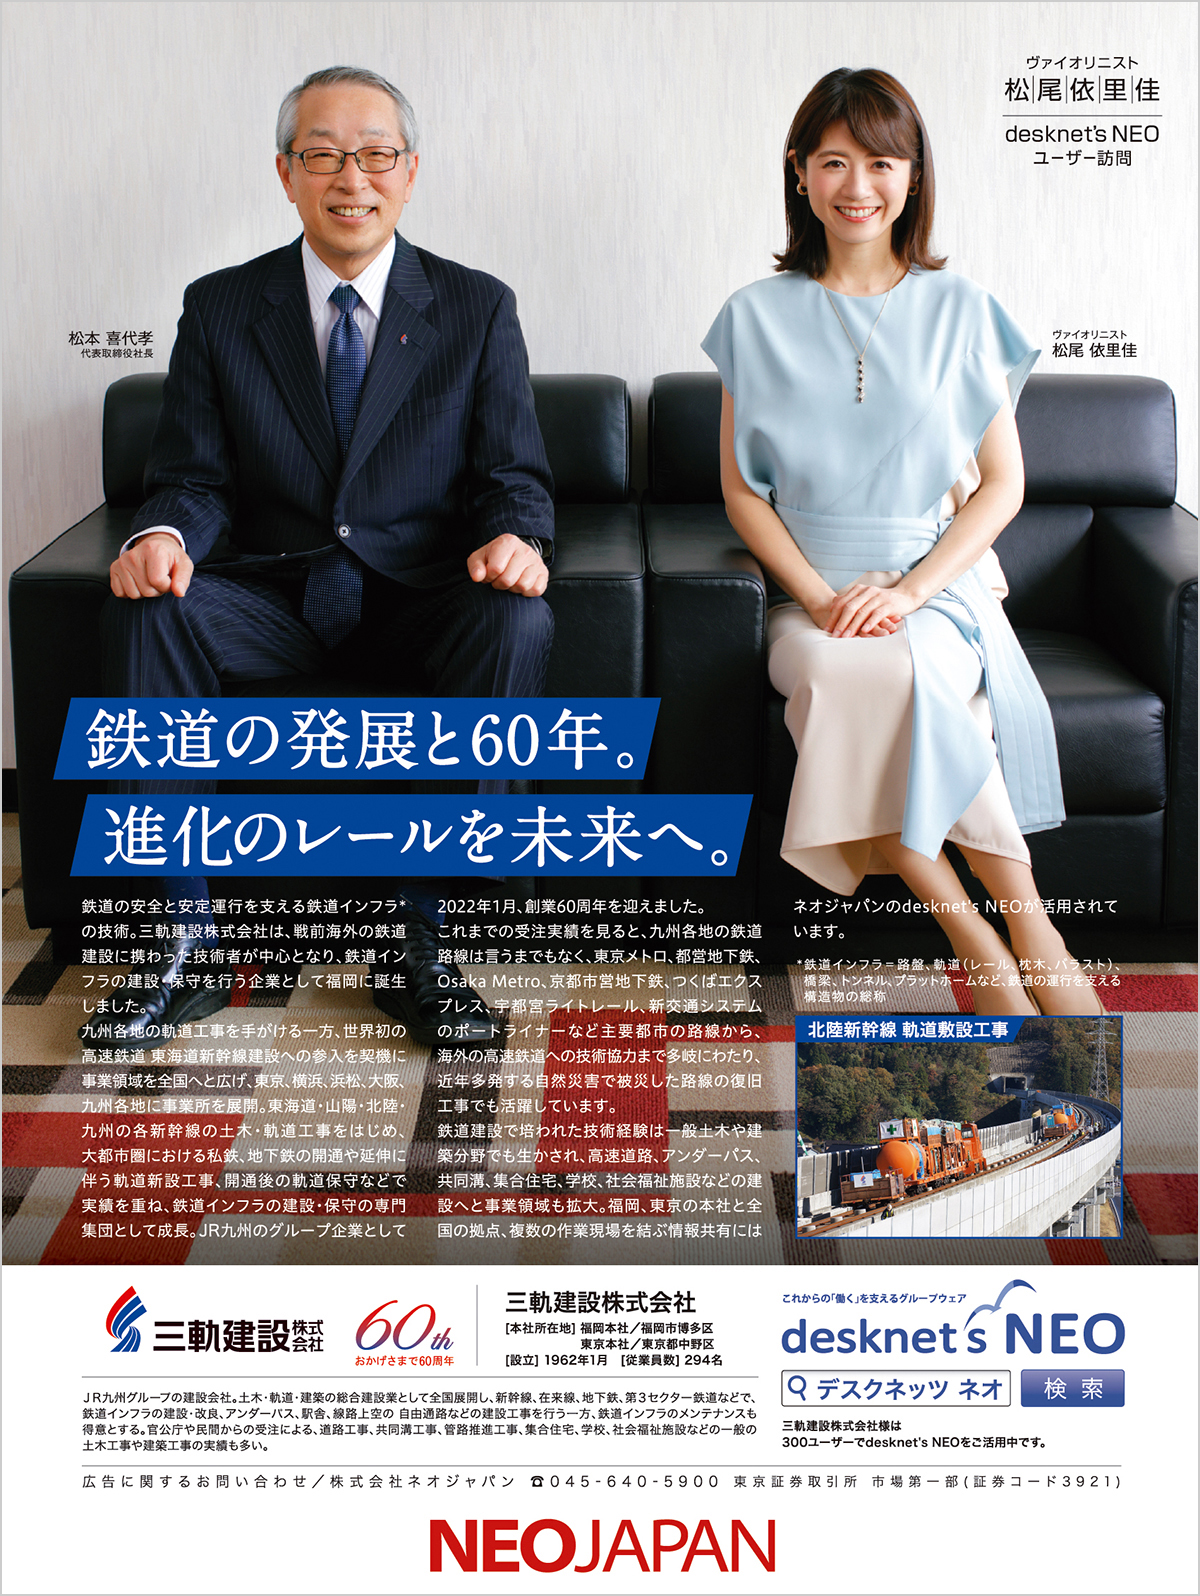 NEO JAPAN様の広告で弊社が紹介され、JAL機内誌「SKYWORD」と「AERA」に弊社社長が登場！